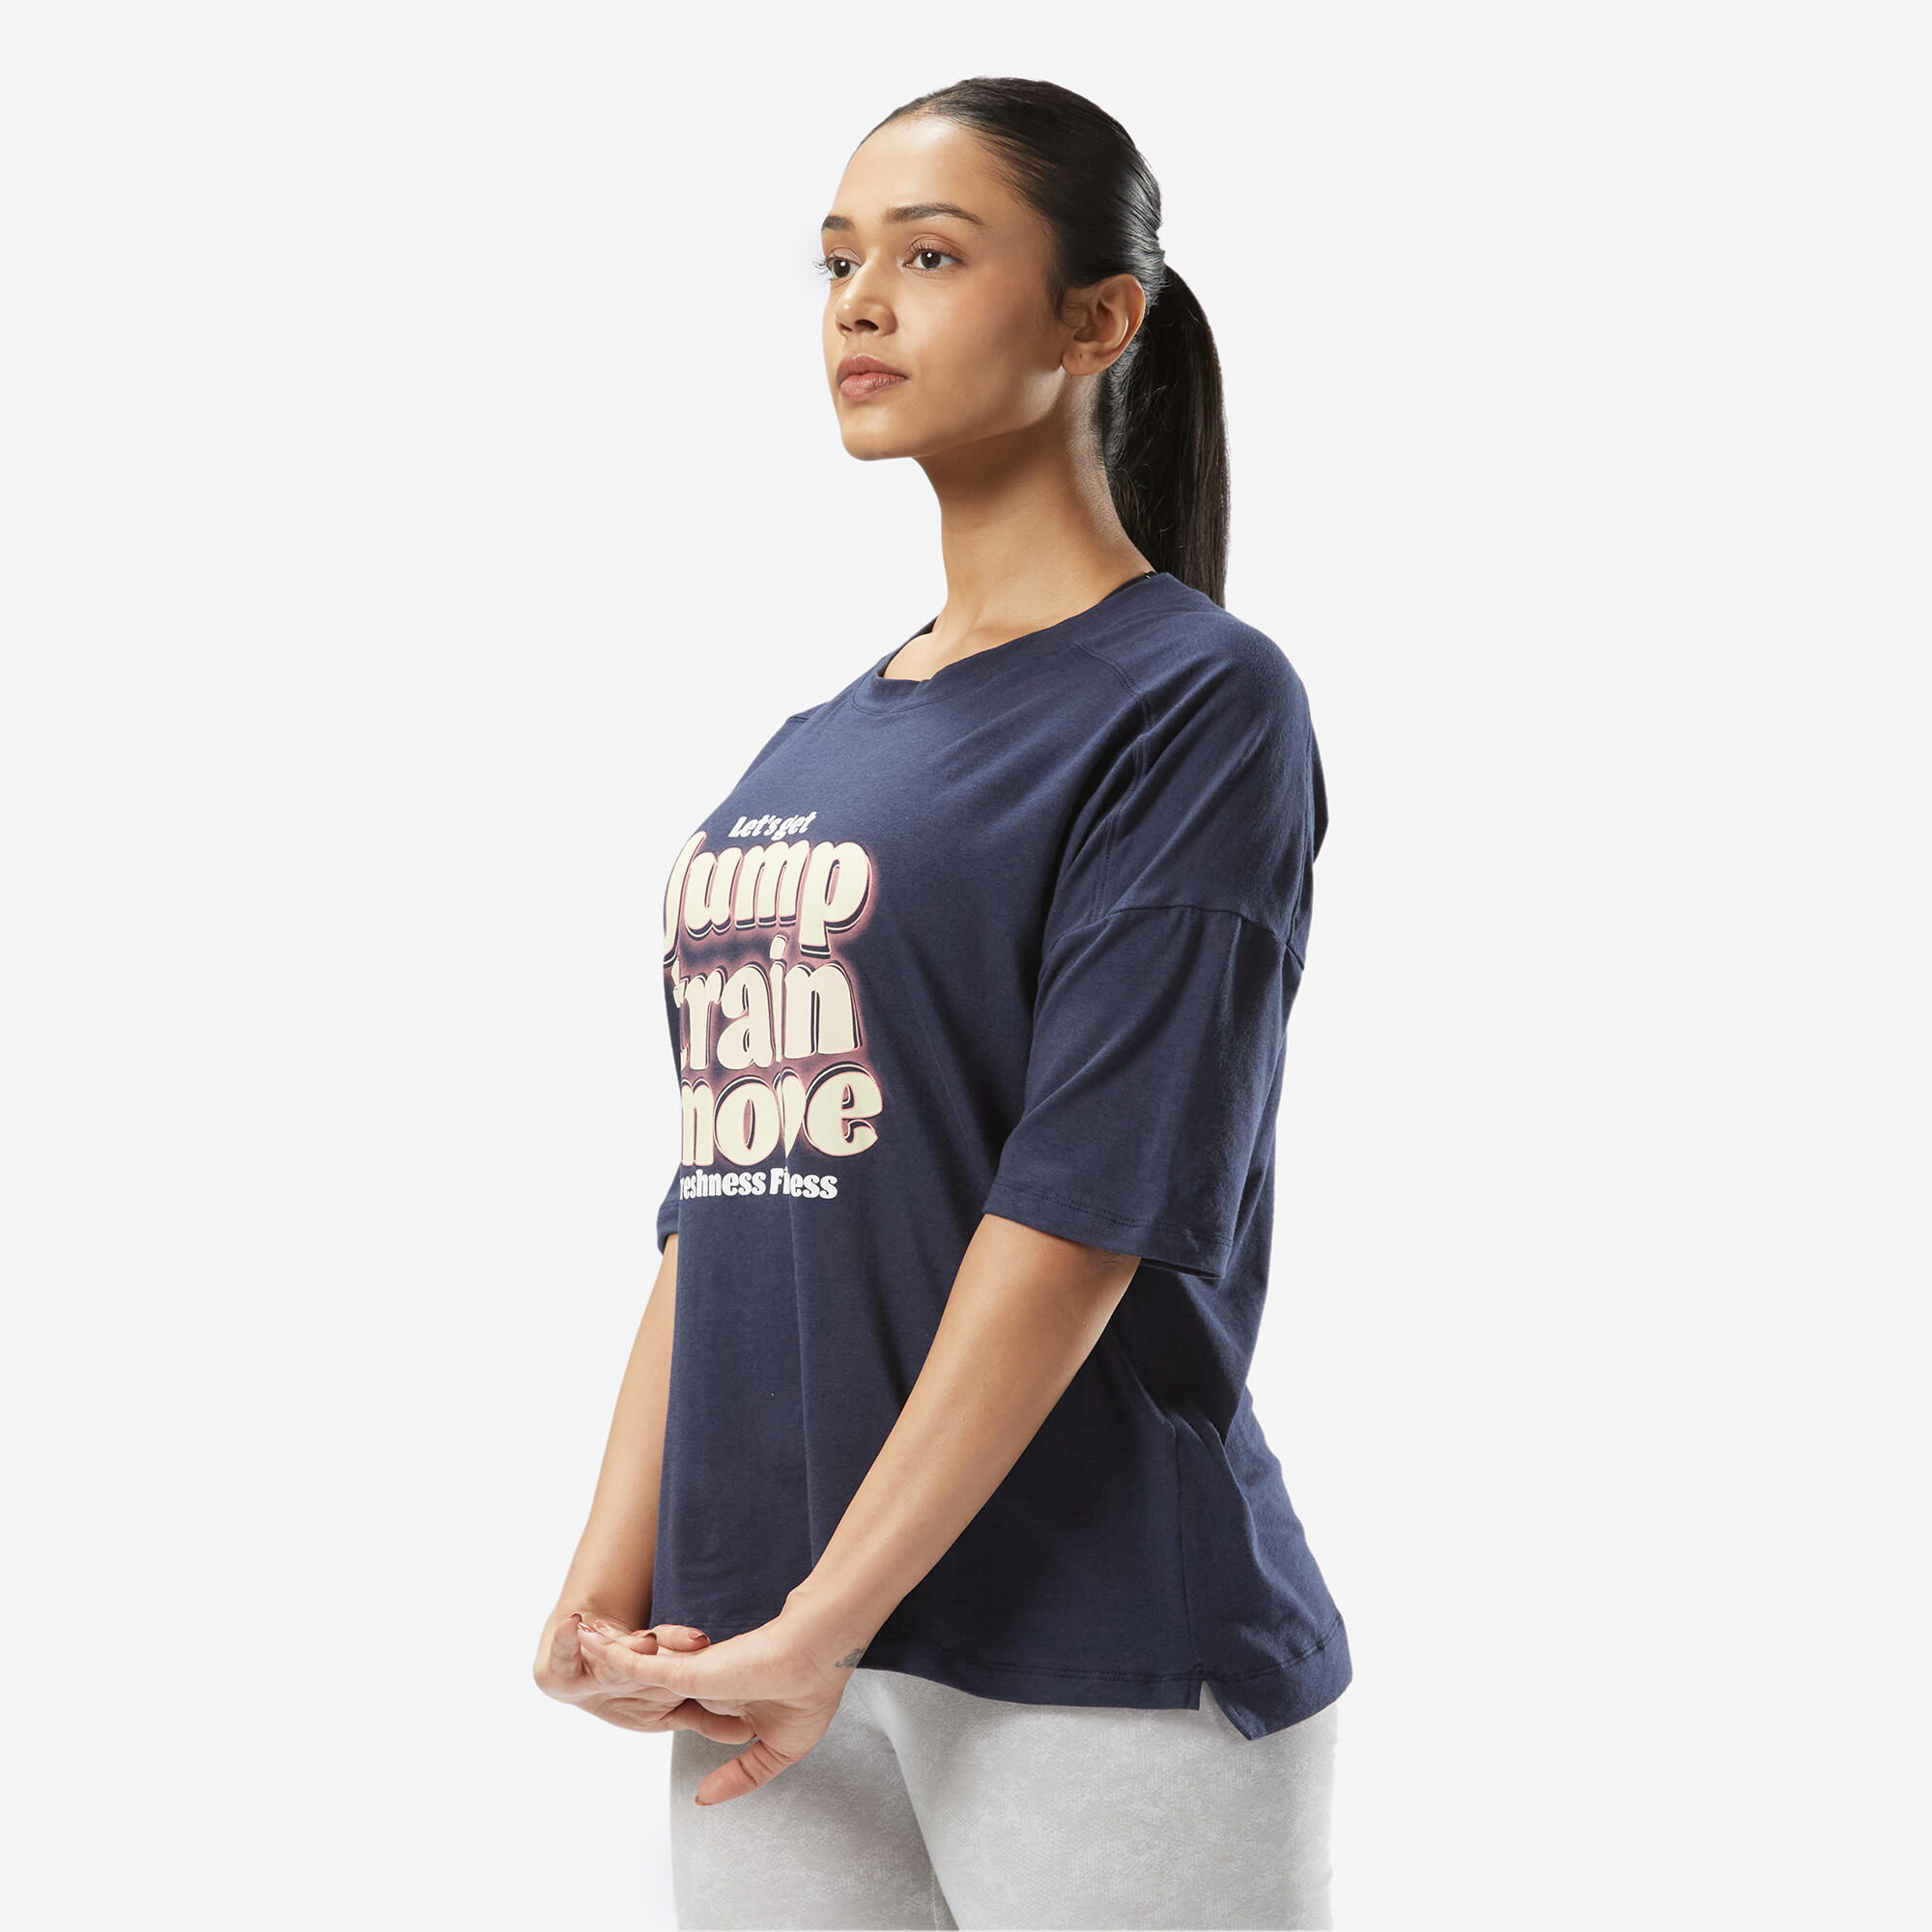 Women's Loose-Fit Fitness T-Shirt 520 - Navy Blue Print 5/6